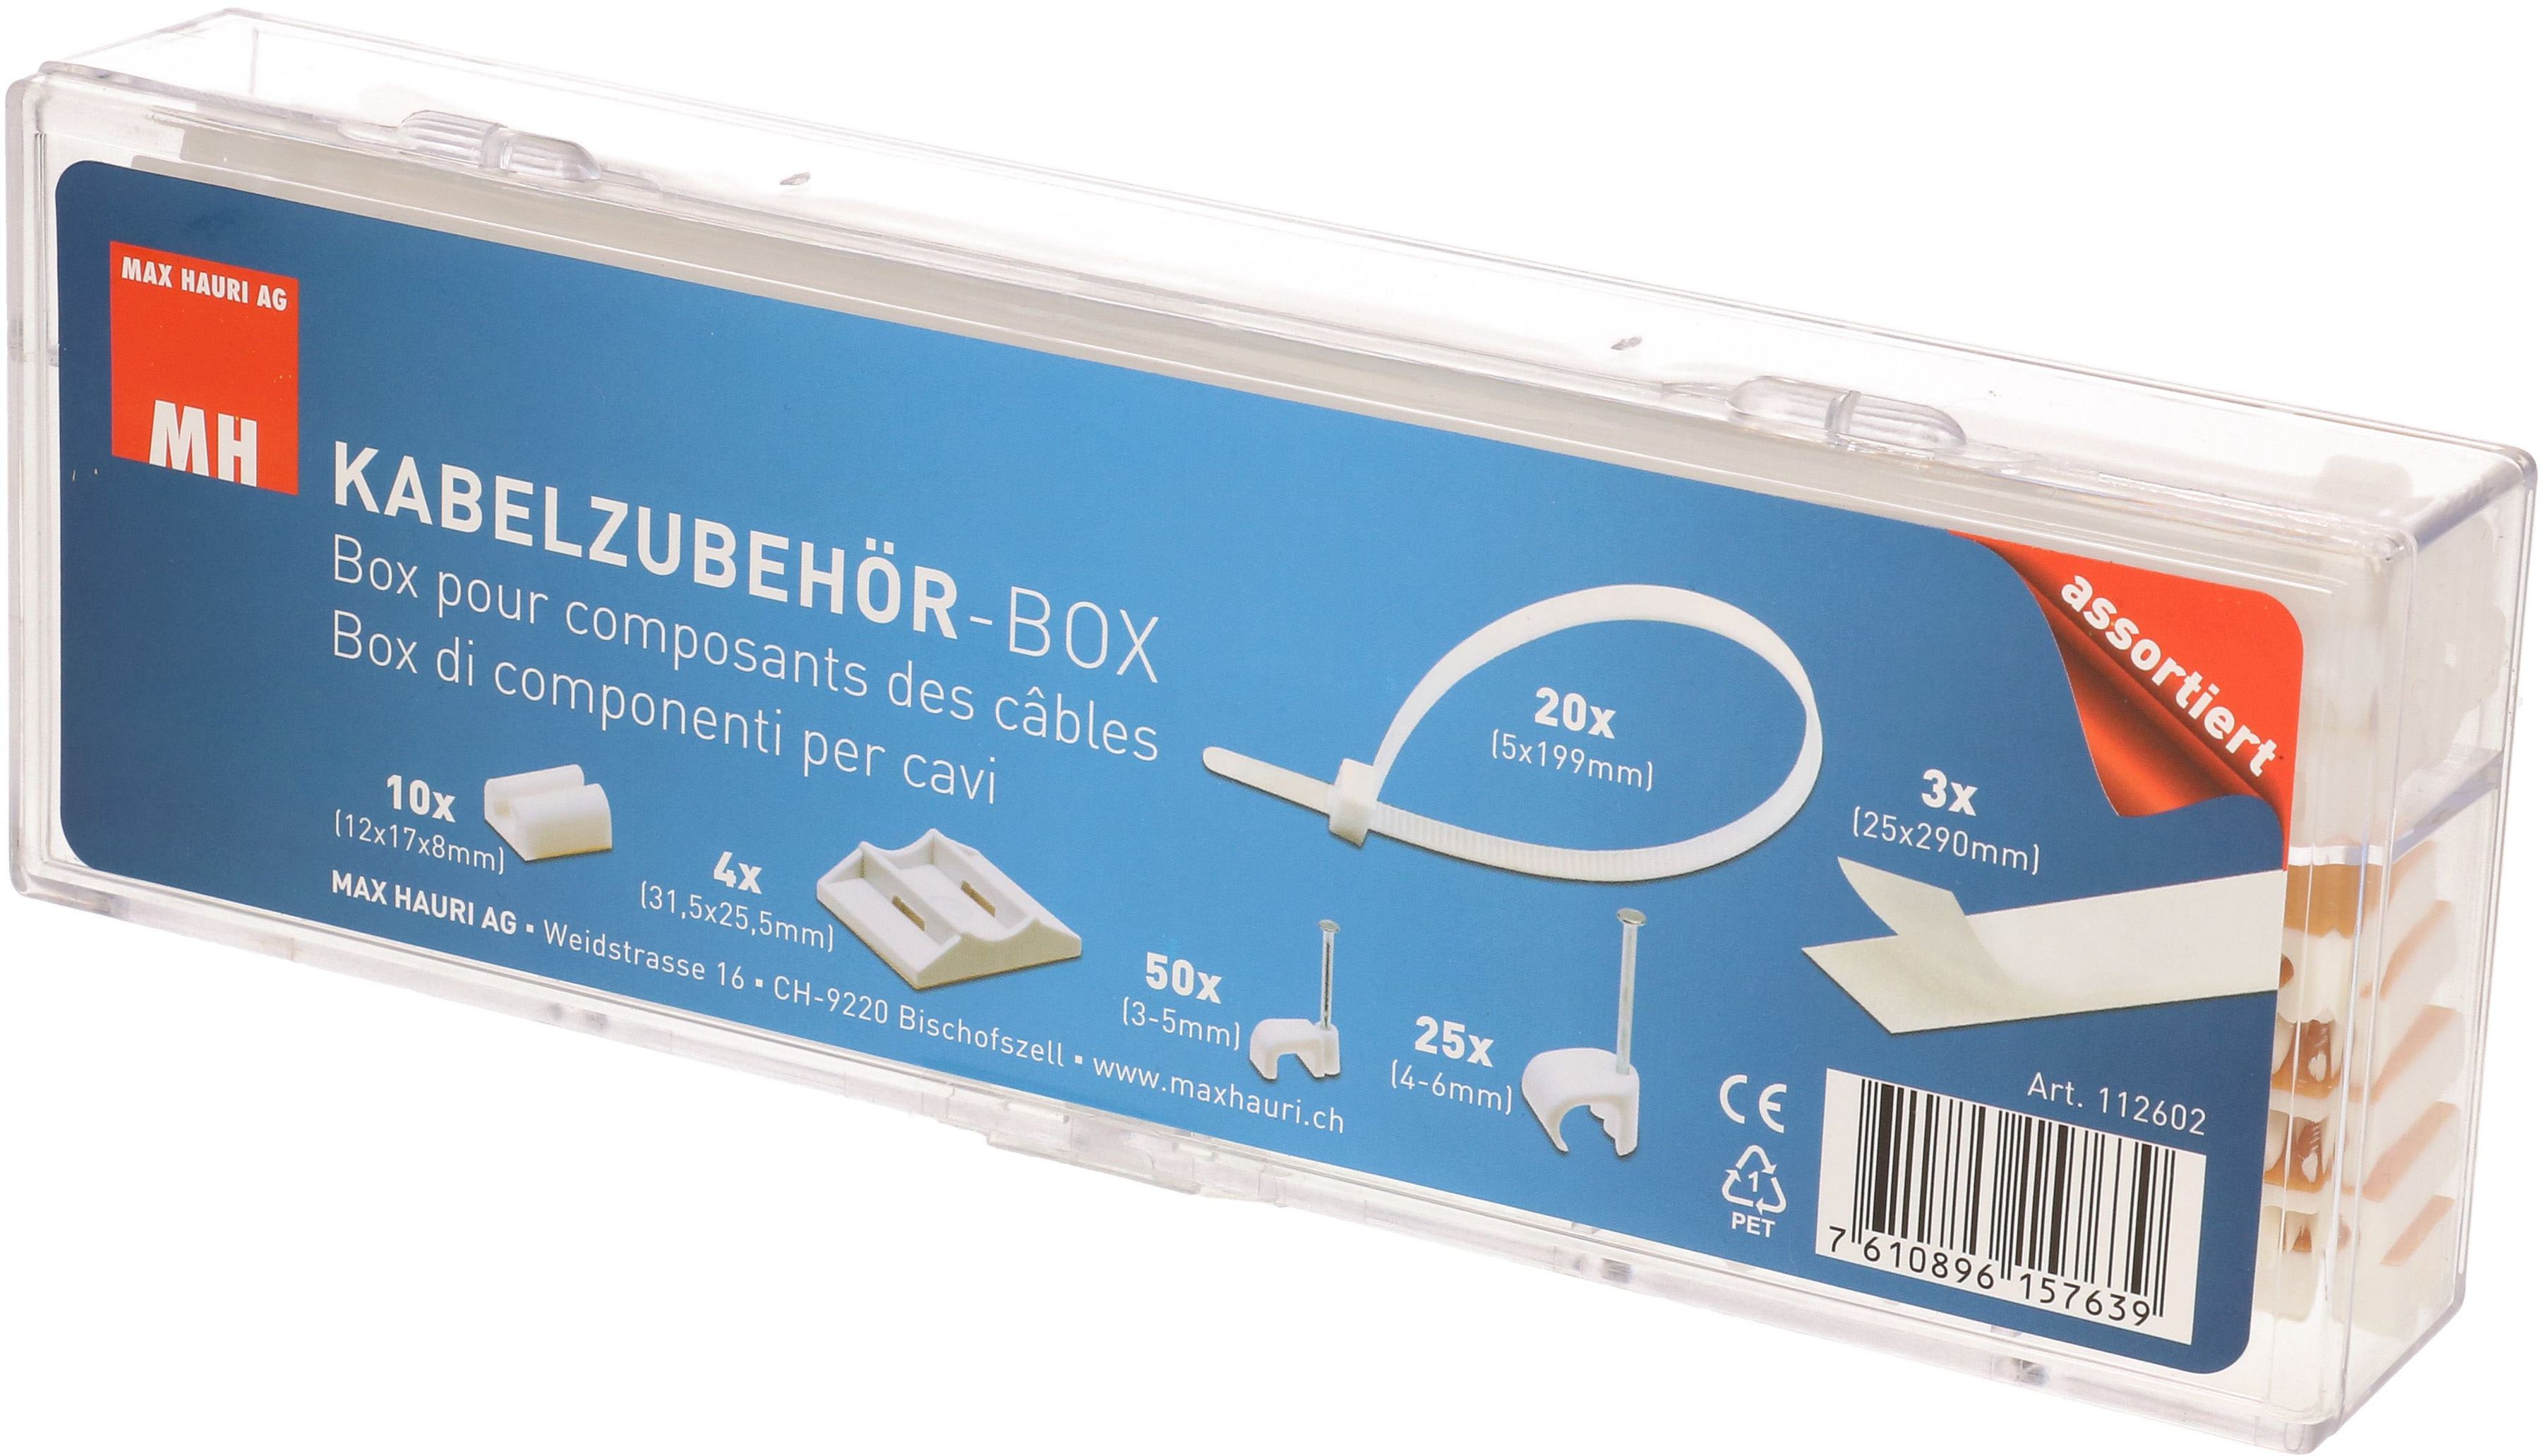 Kabel-Zubehör-Box transparent